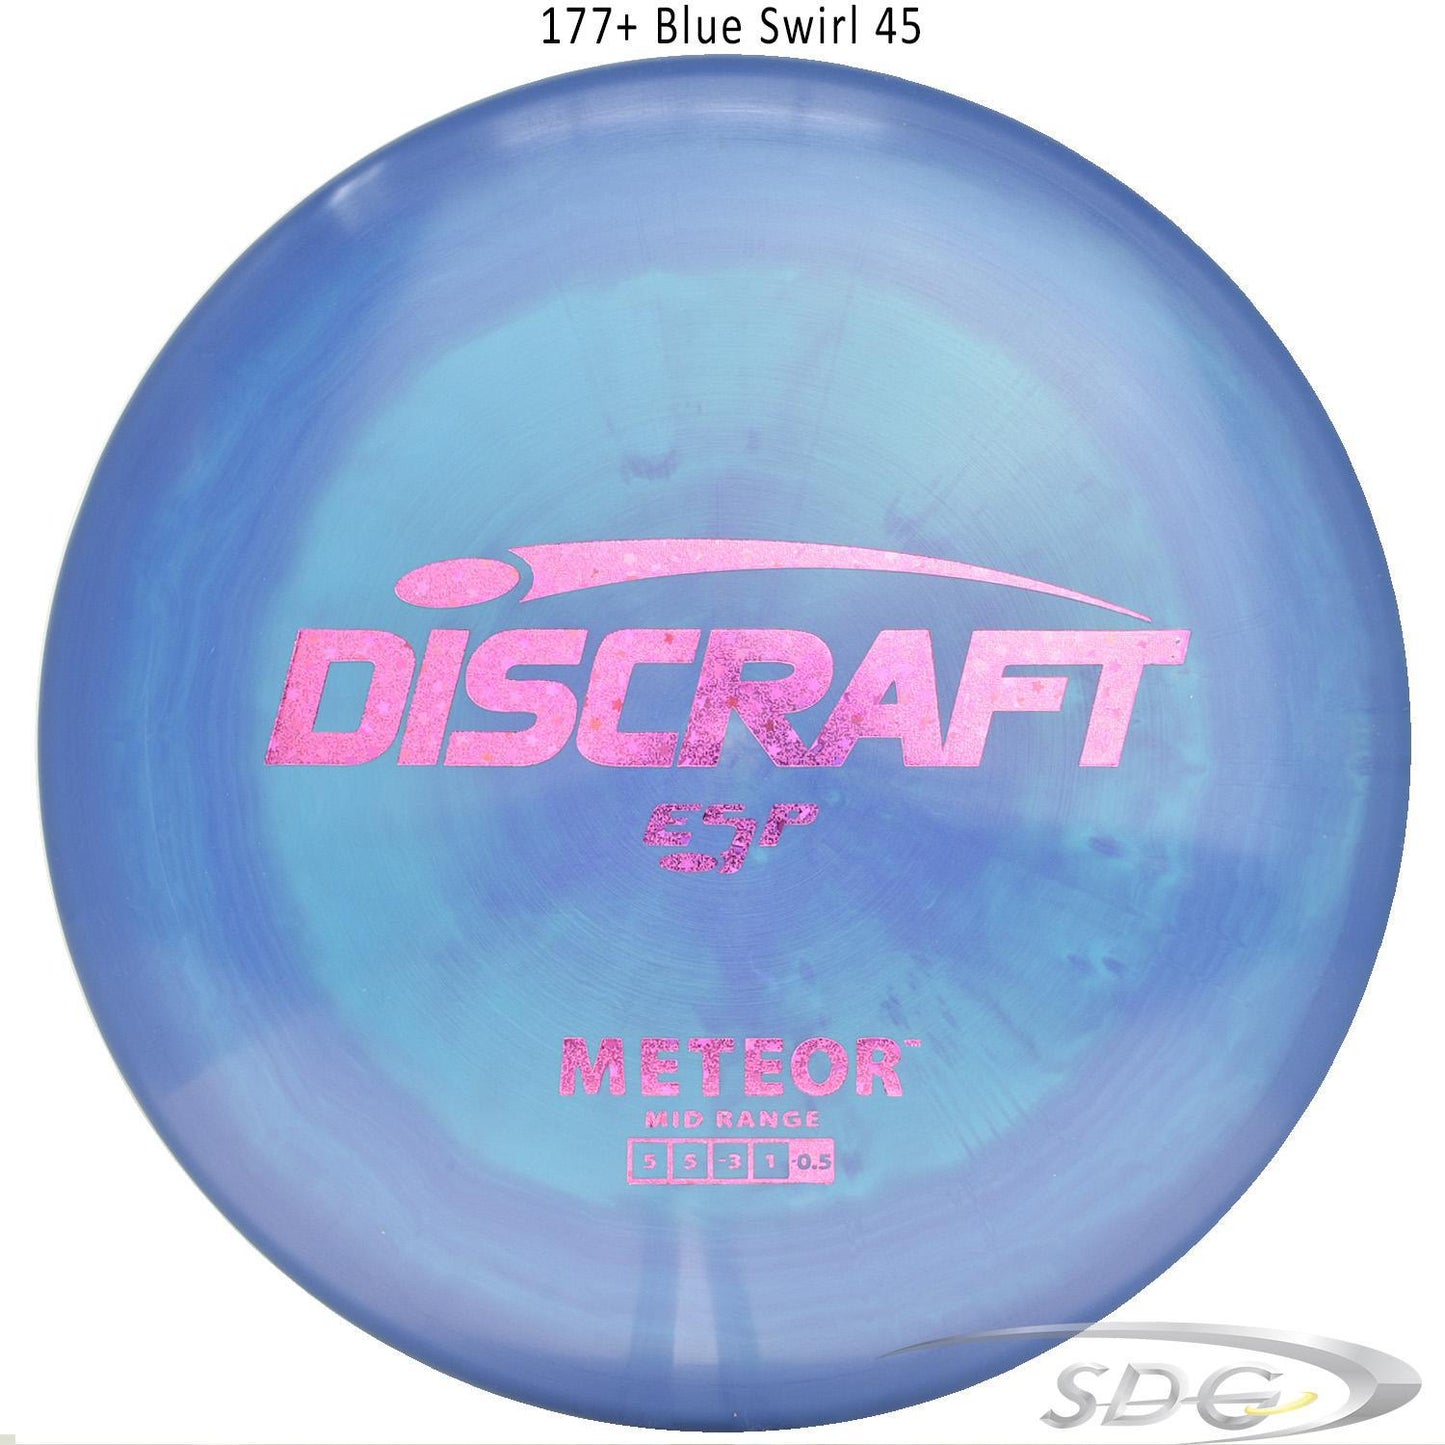 discraft-esp-meteor-disc-golf-mid-range 177+ Blue Swirl 45 